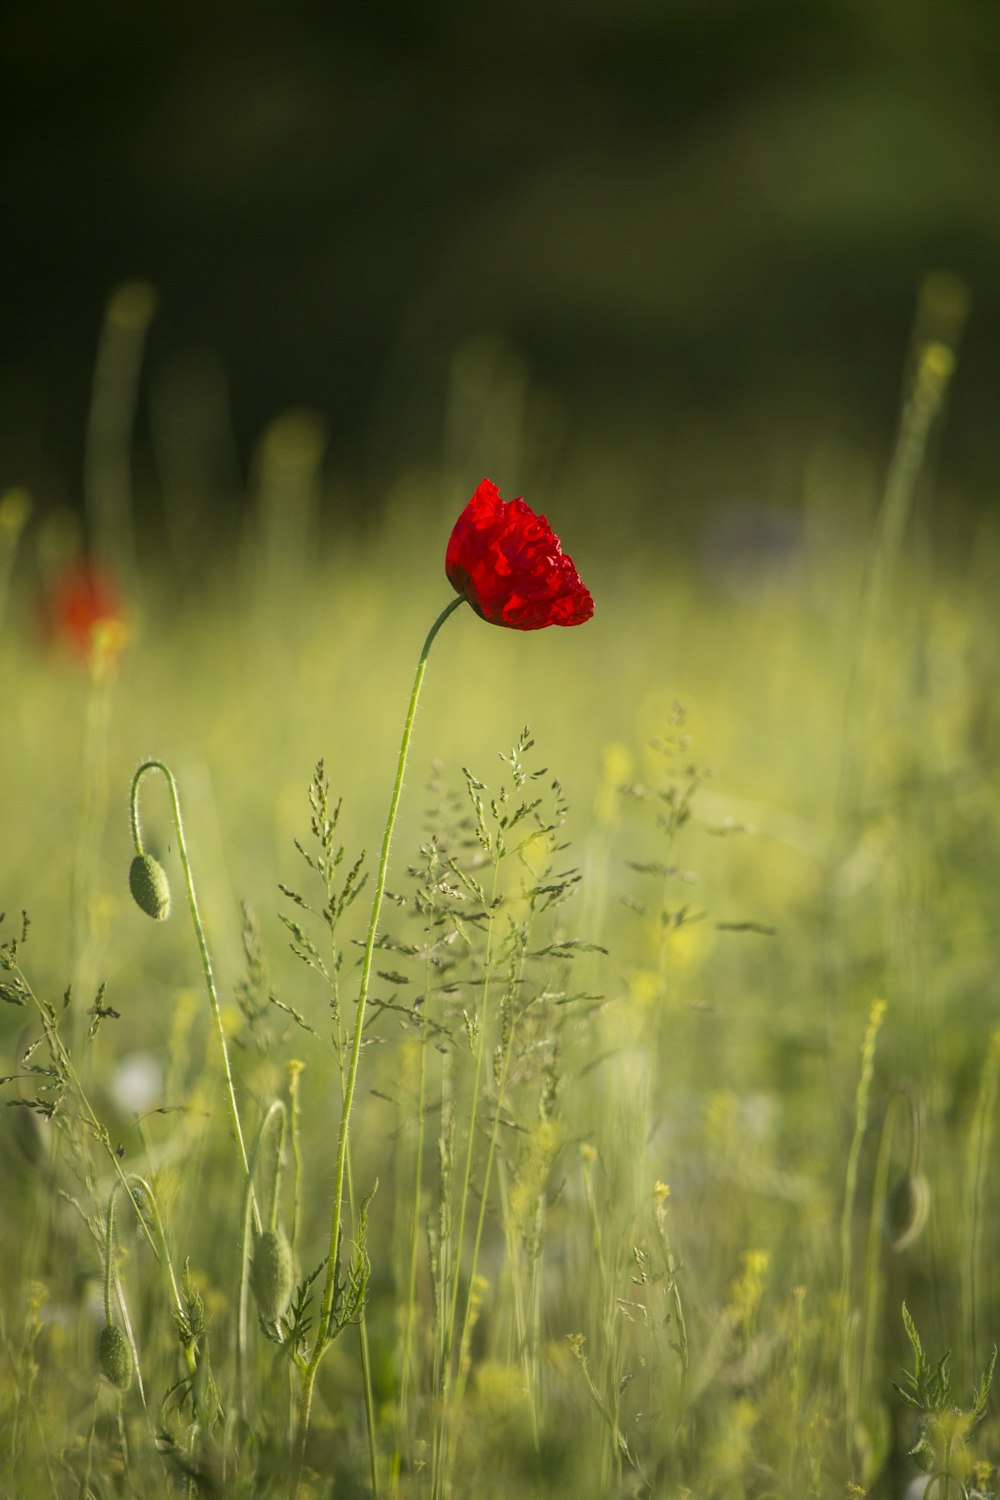 red flower in green grass field during daytime